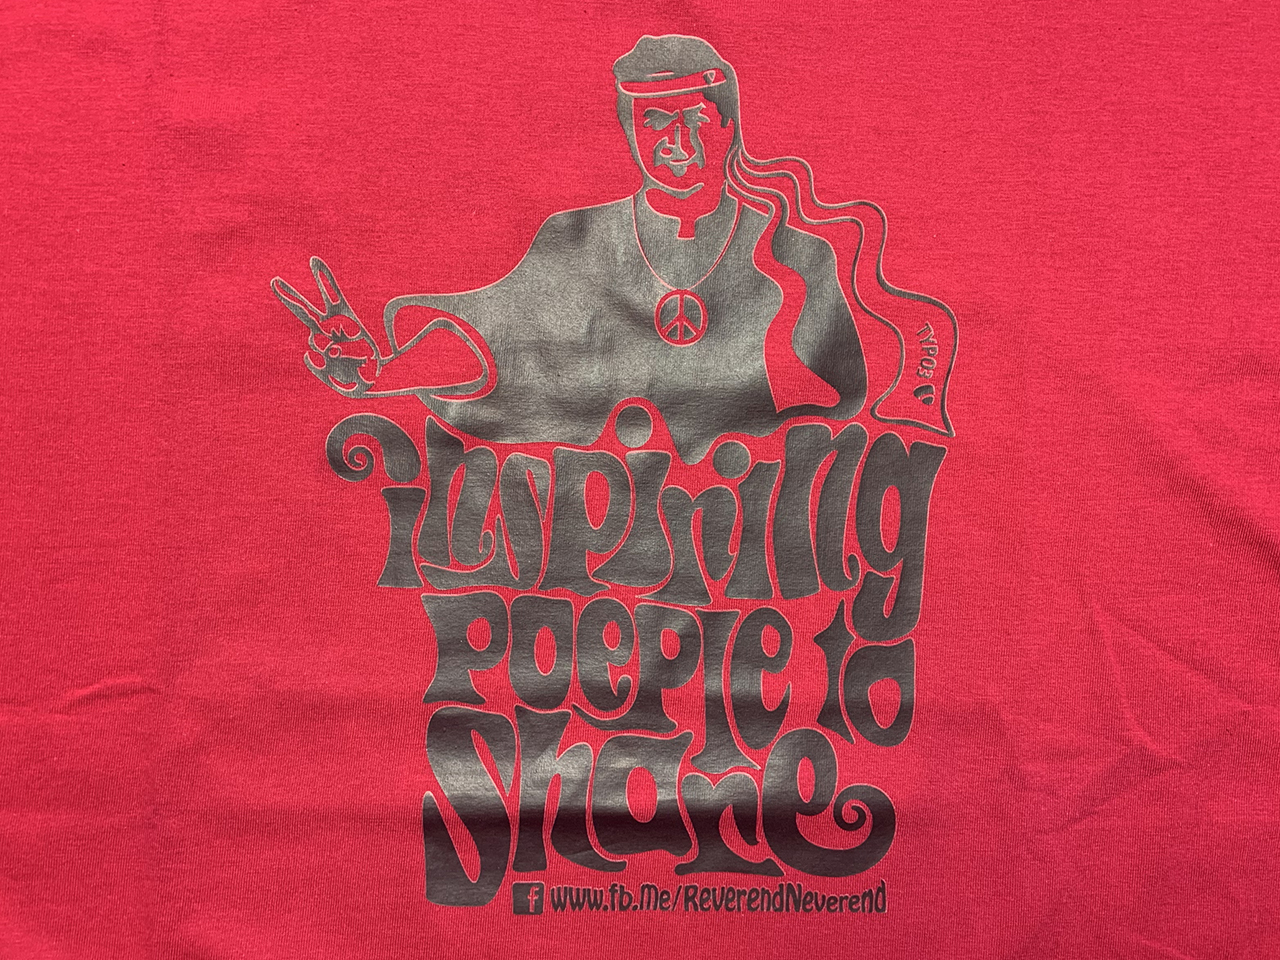 Pinkes "Inspiring People to Share"-Shirt